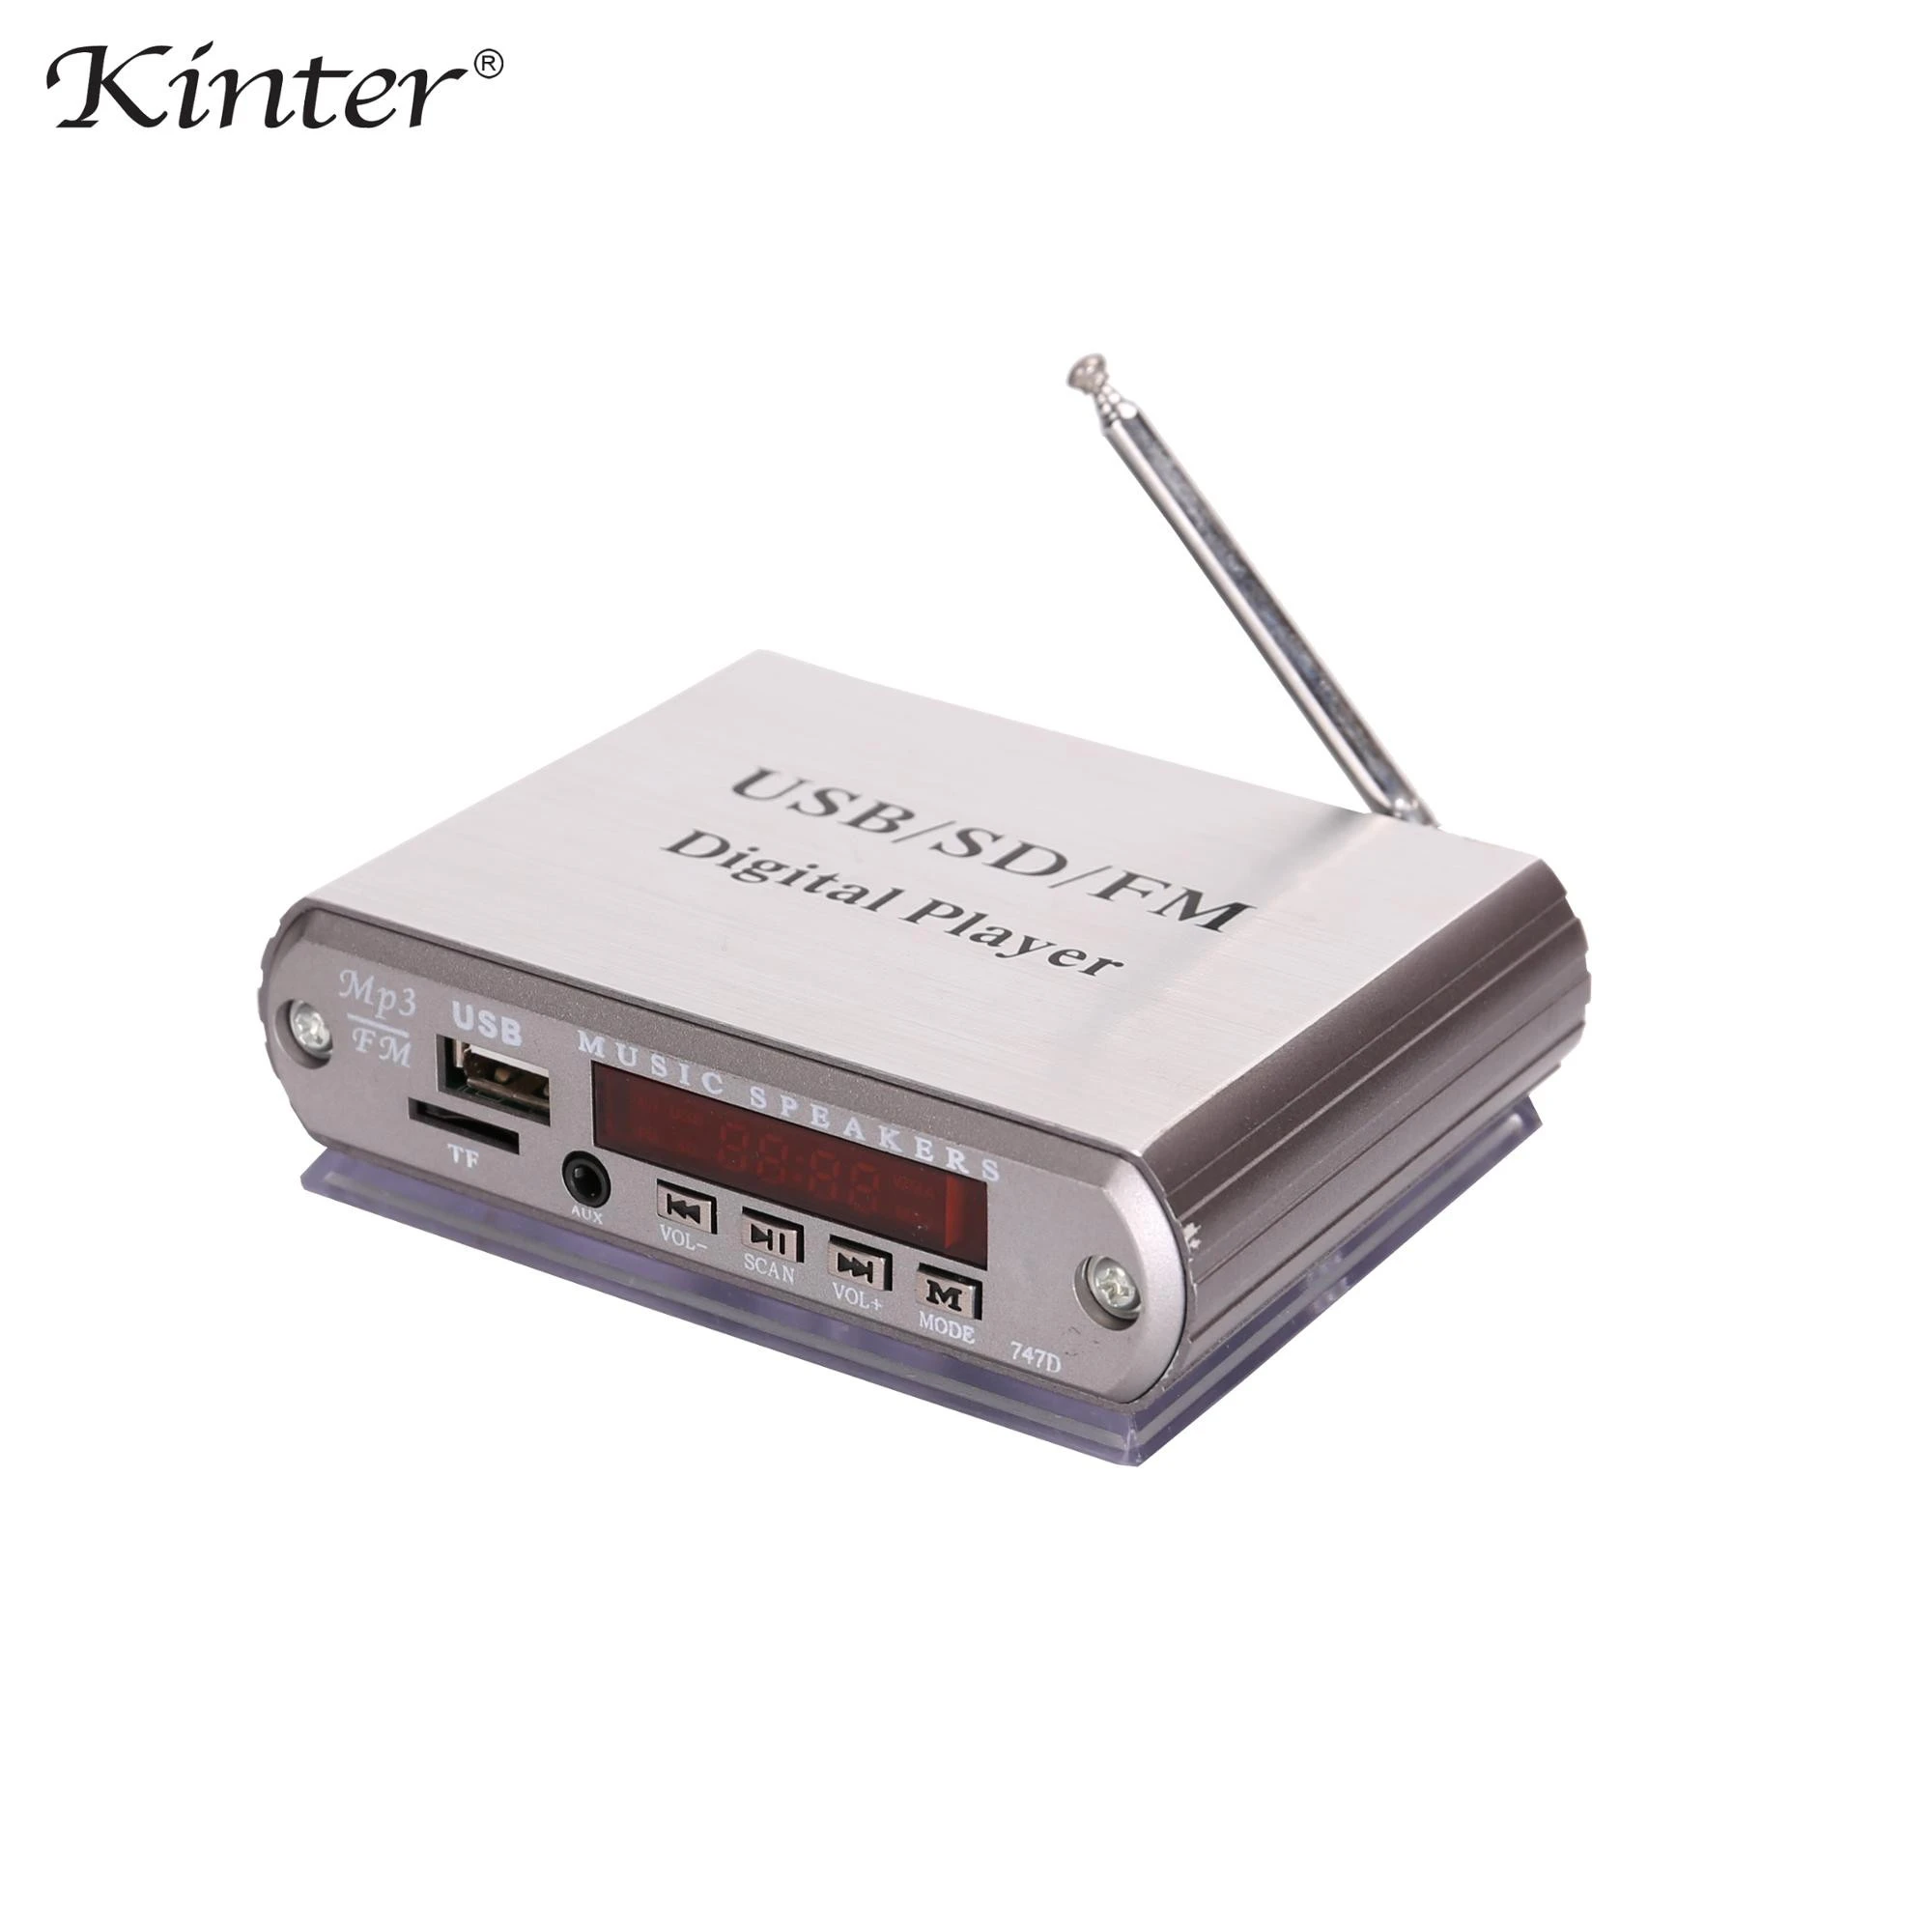 sd usb player with fm radio mini card reader kinter-A5